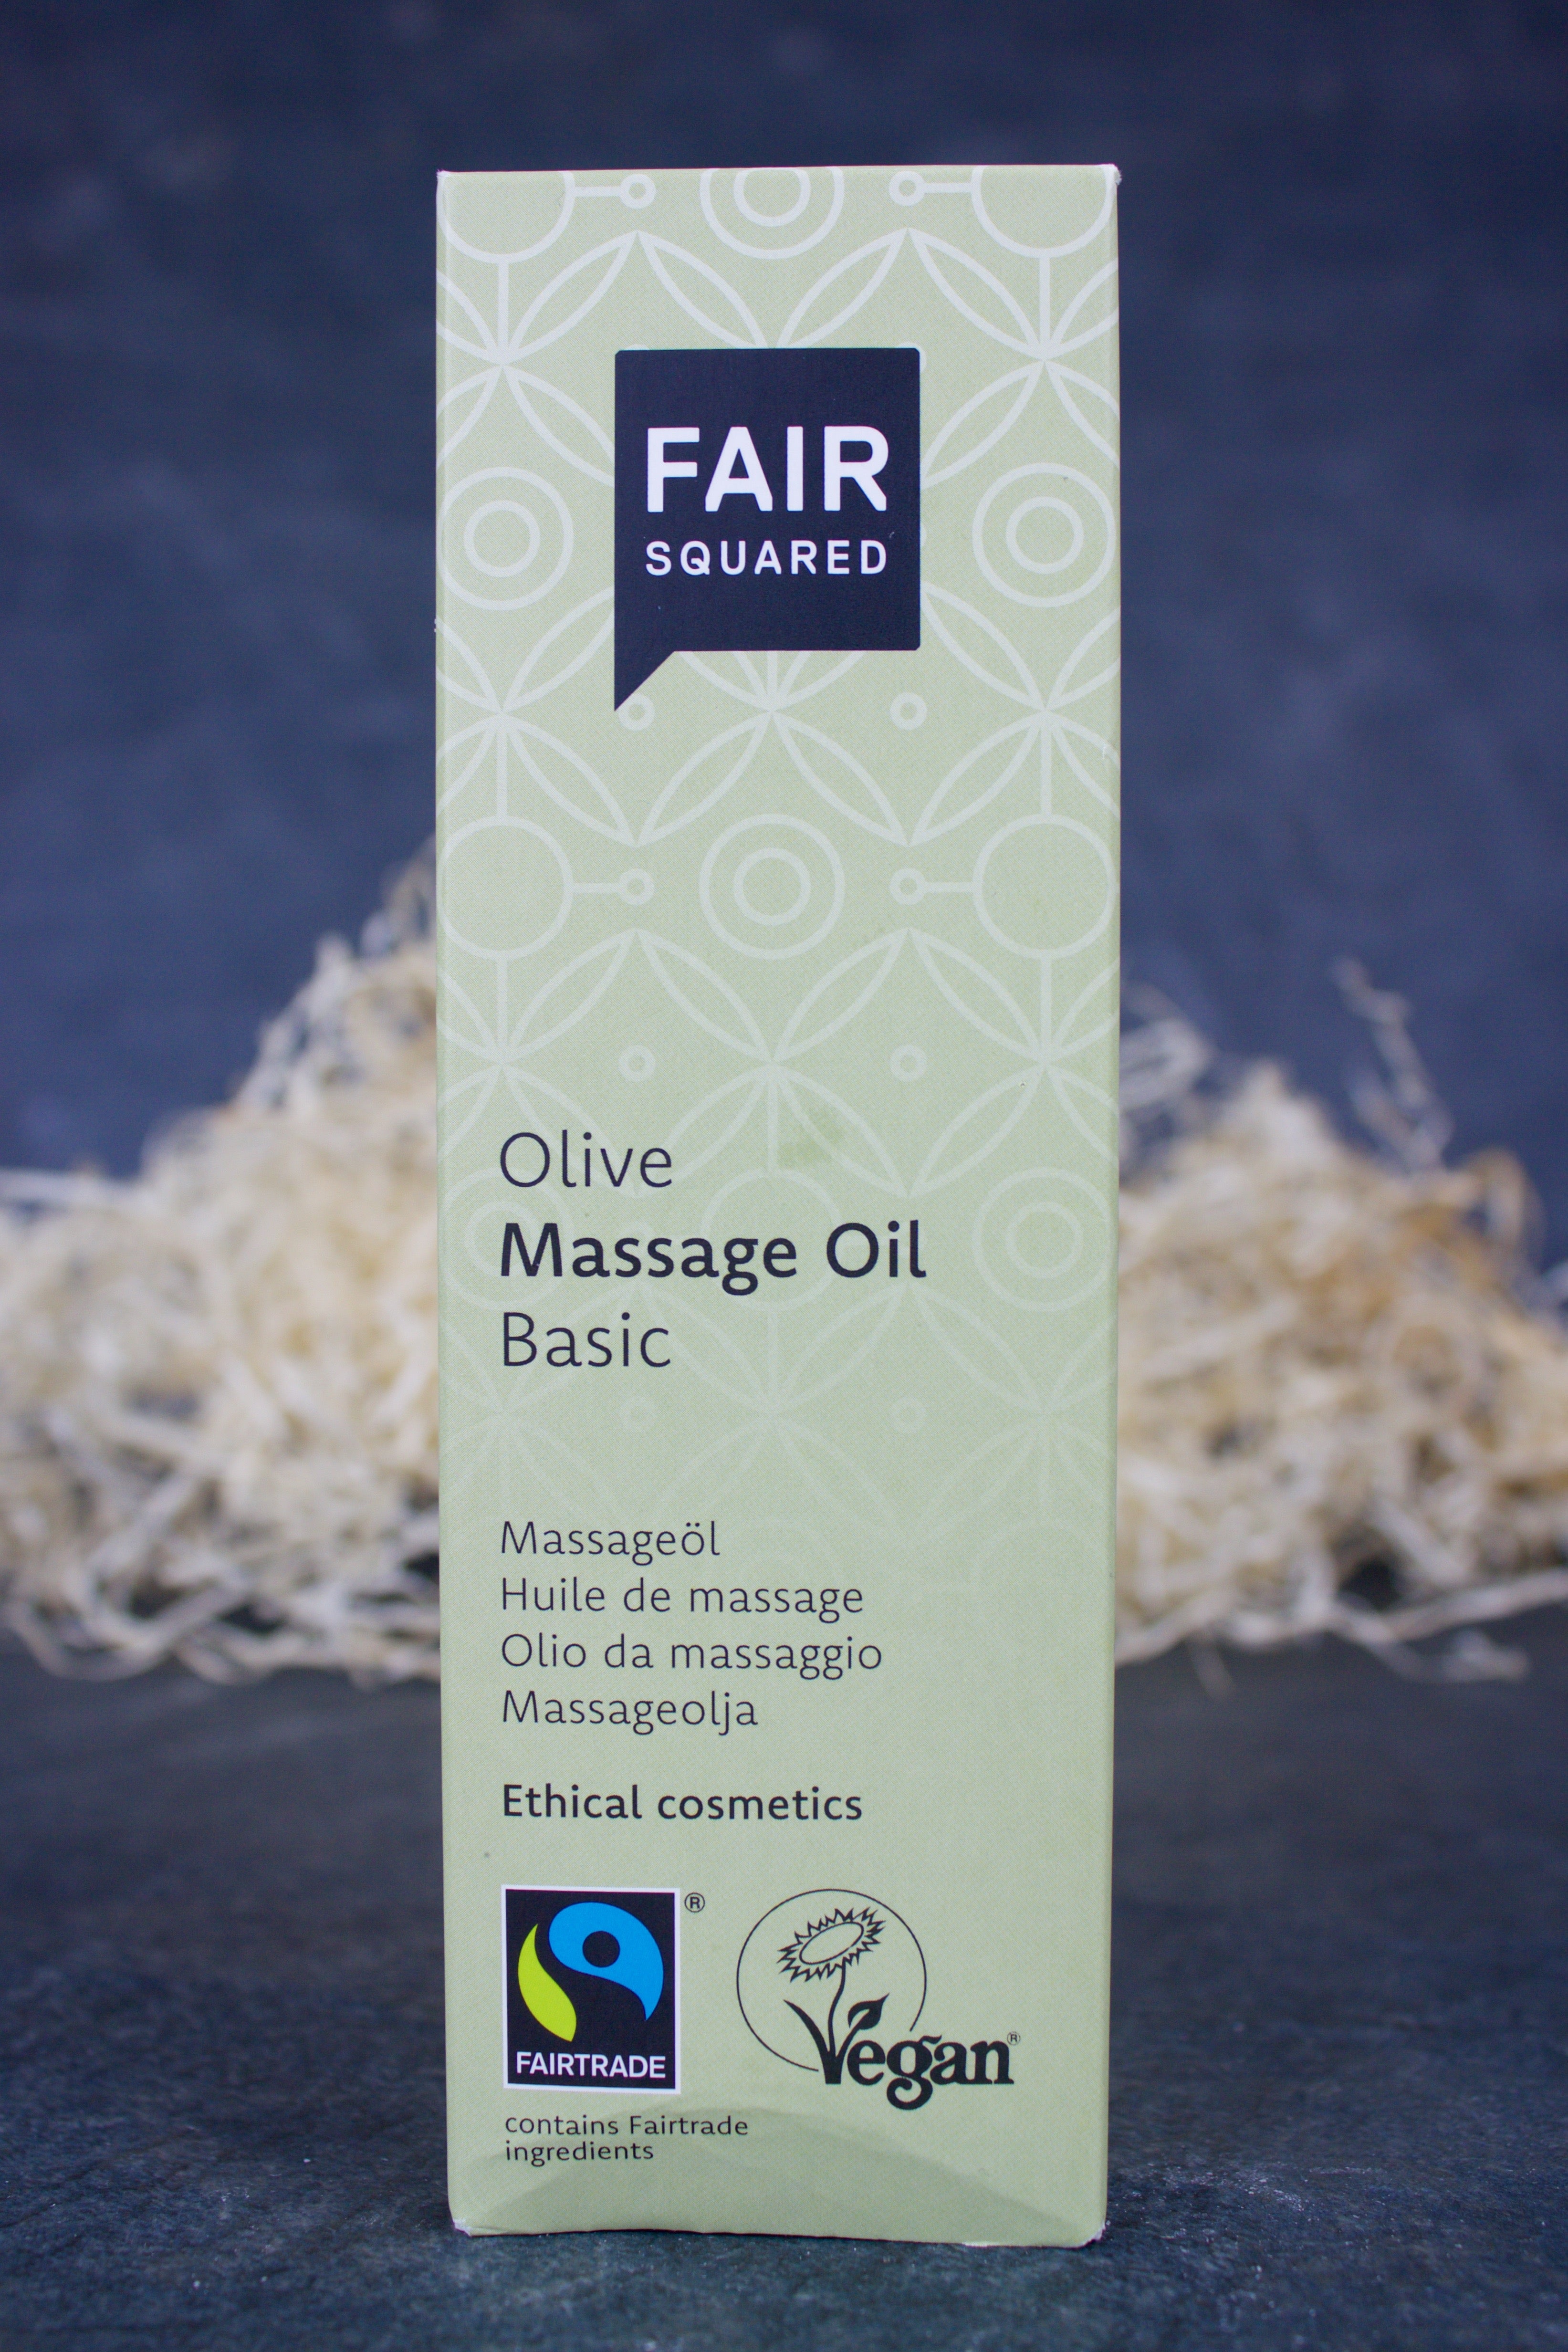 Fair squared- Oliven massageolie 150ml - Nordic- wellness.dk